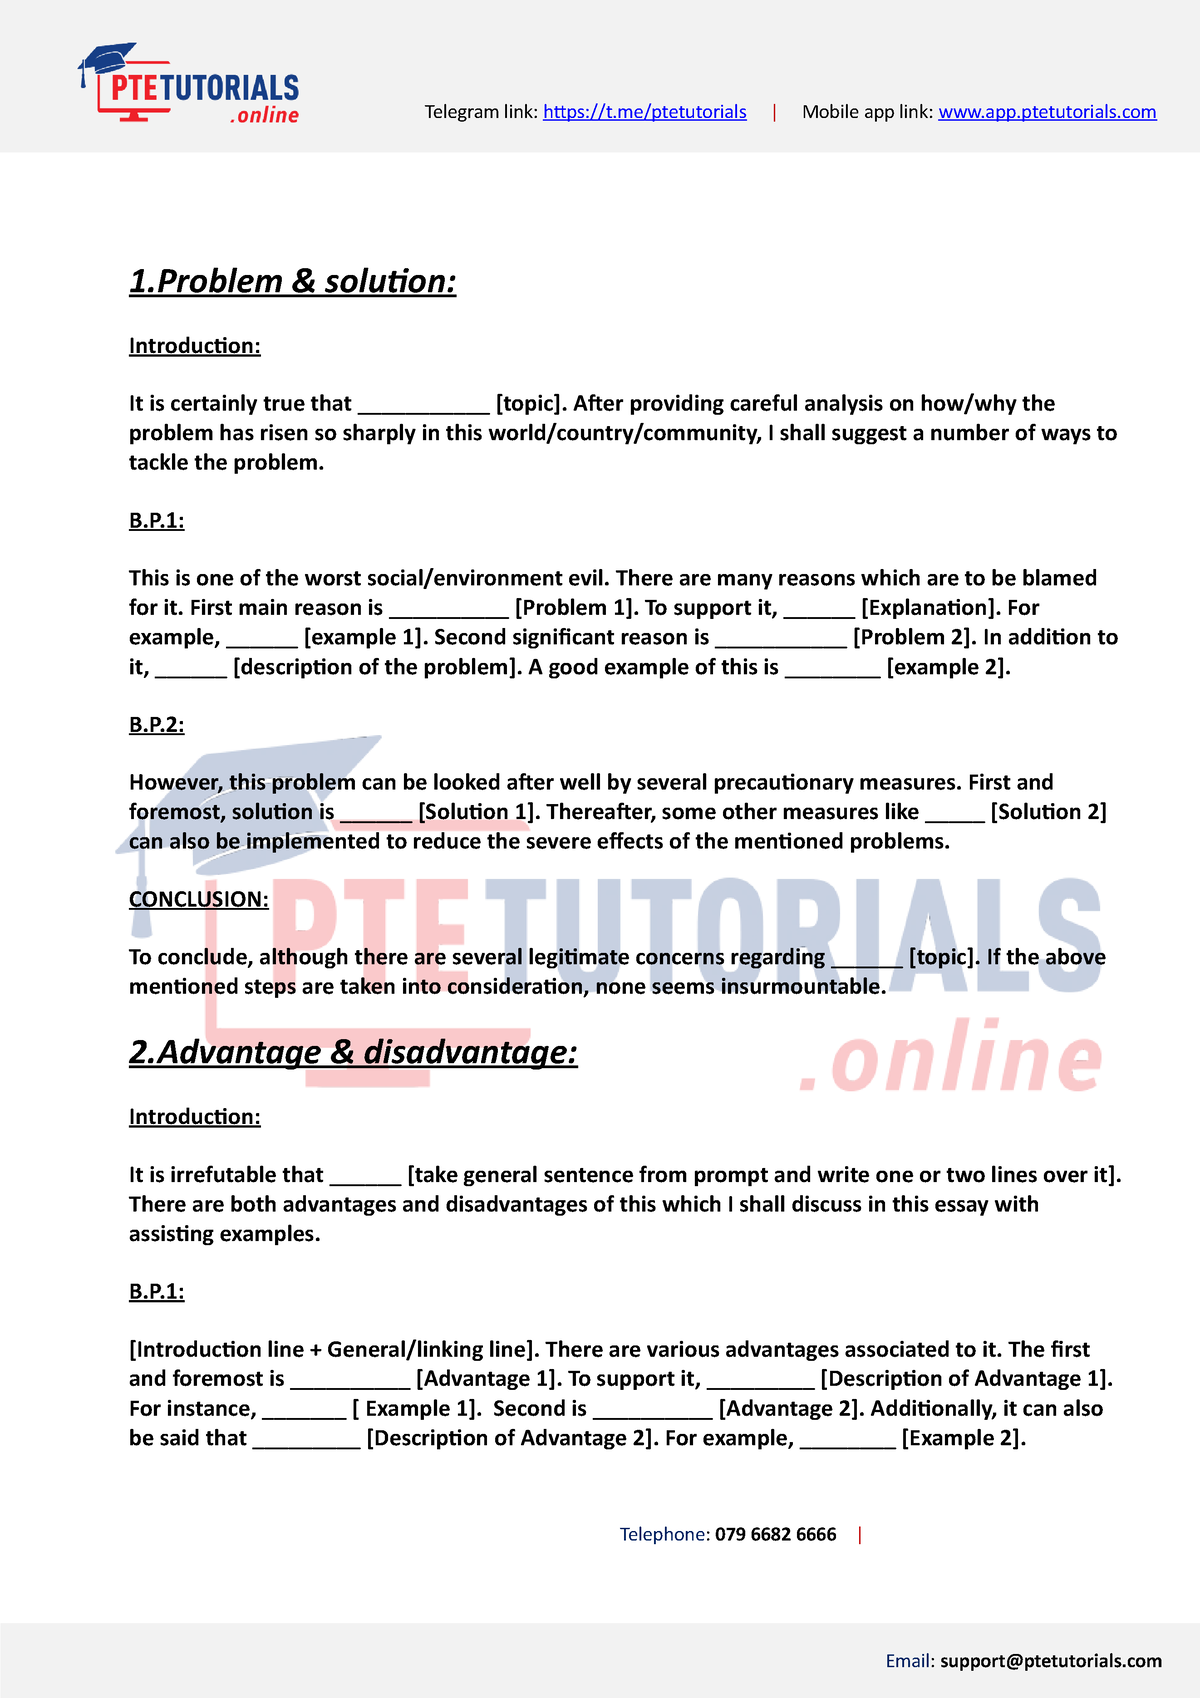 pte template essay pdf download